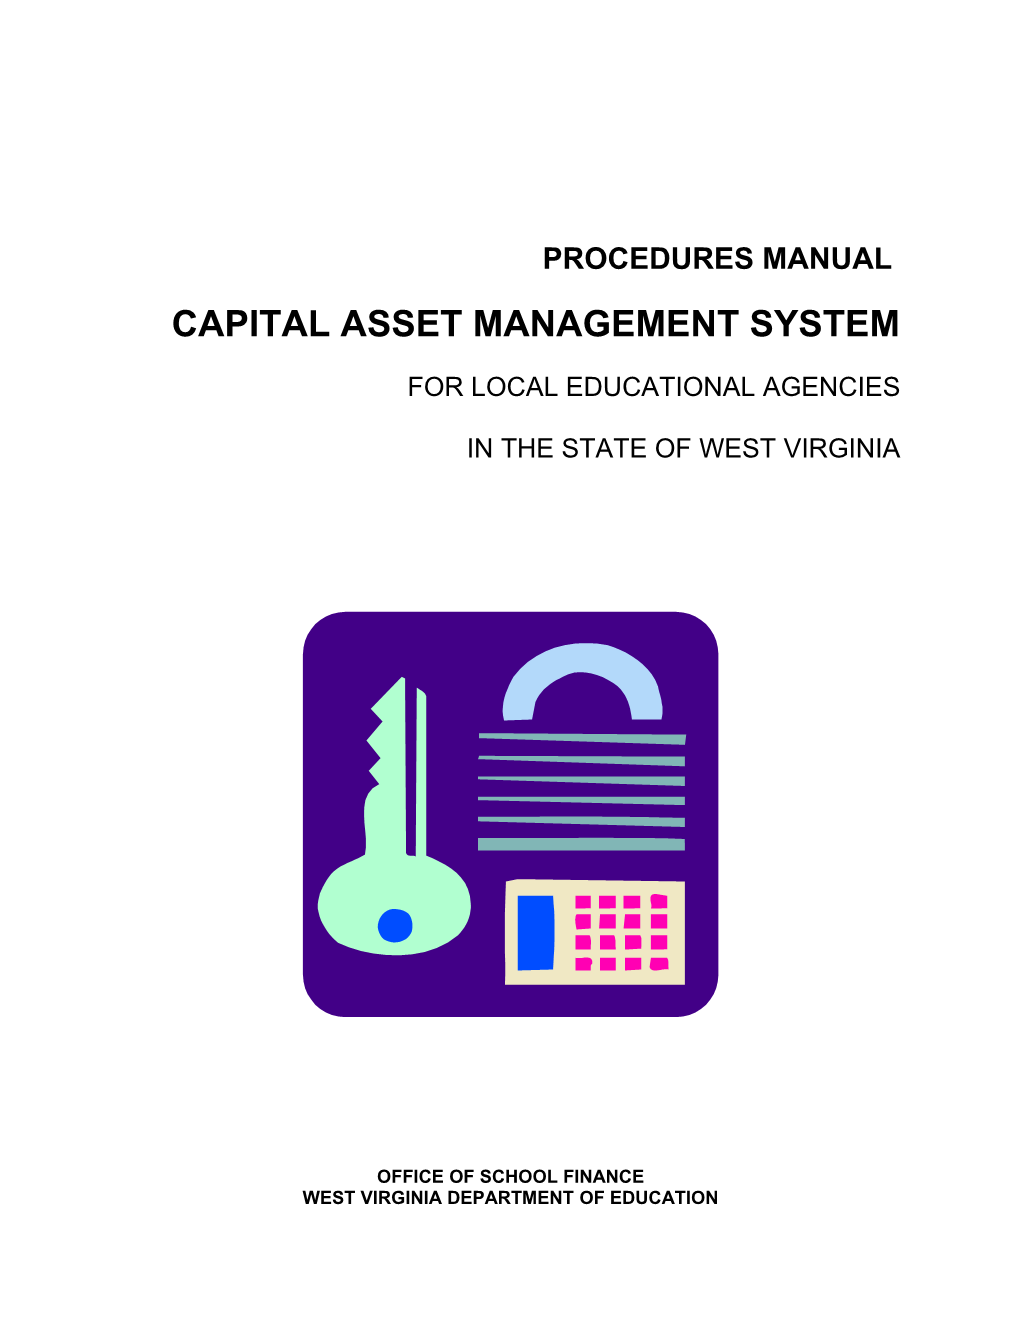 Capital Asset Management System